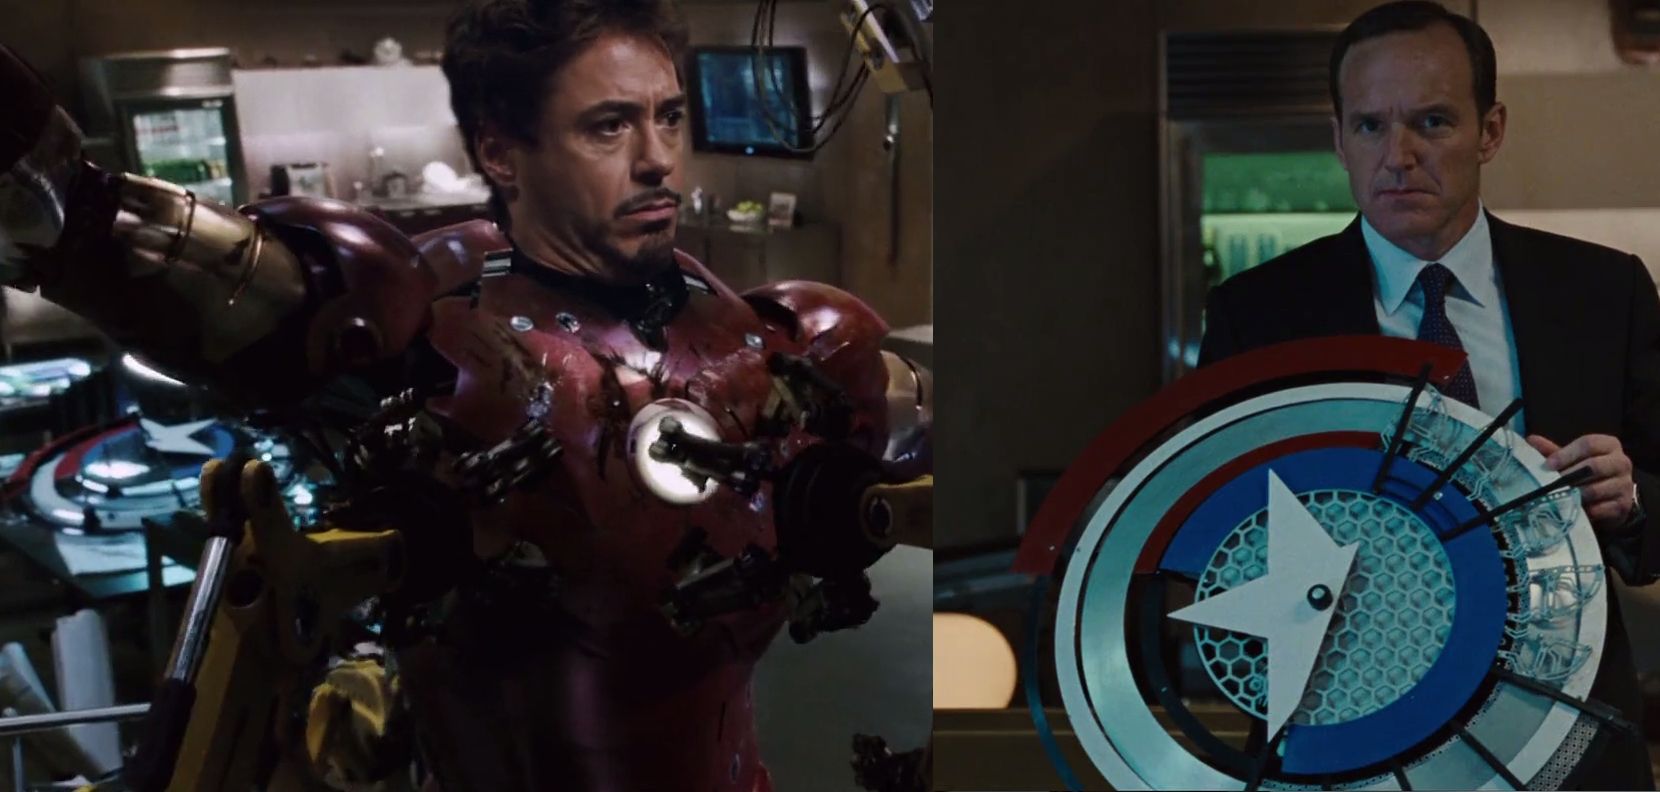 Robert_Downey_Jr_As_Tony_Stark_In_Iron_Man